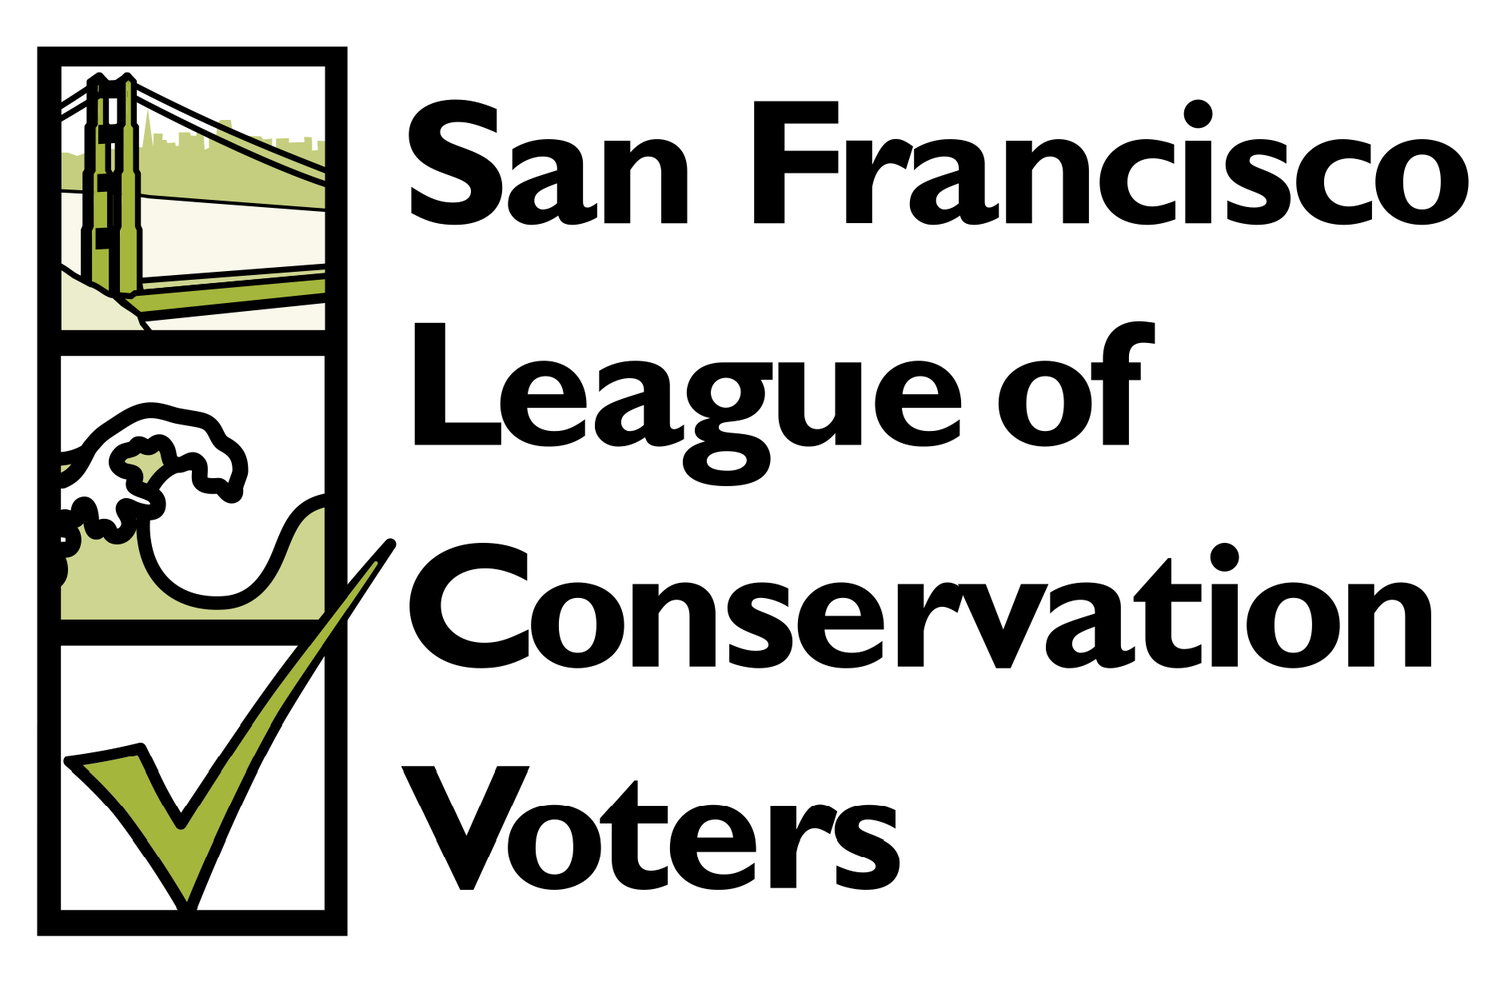 San Francisco League of Conservation Voters